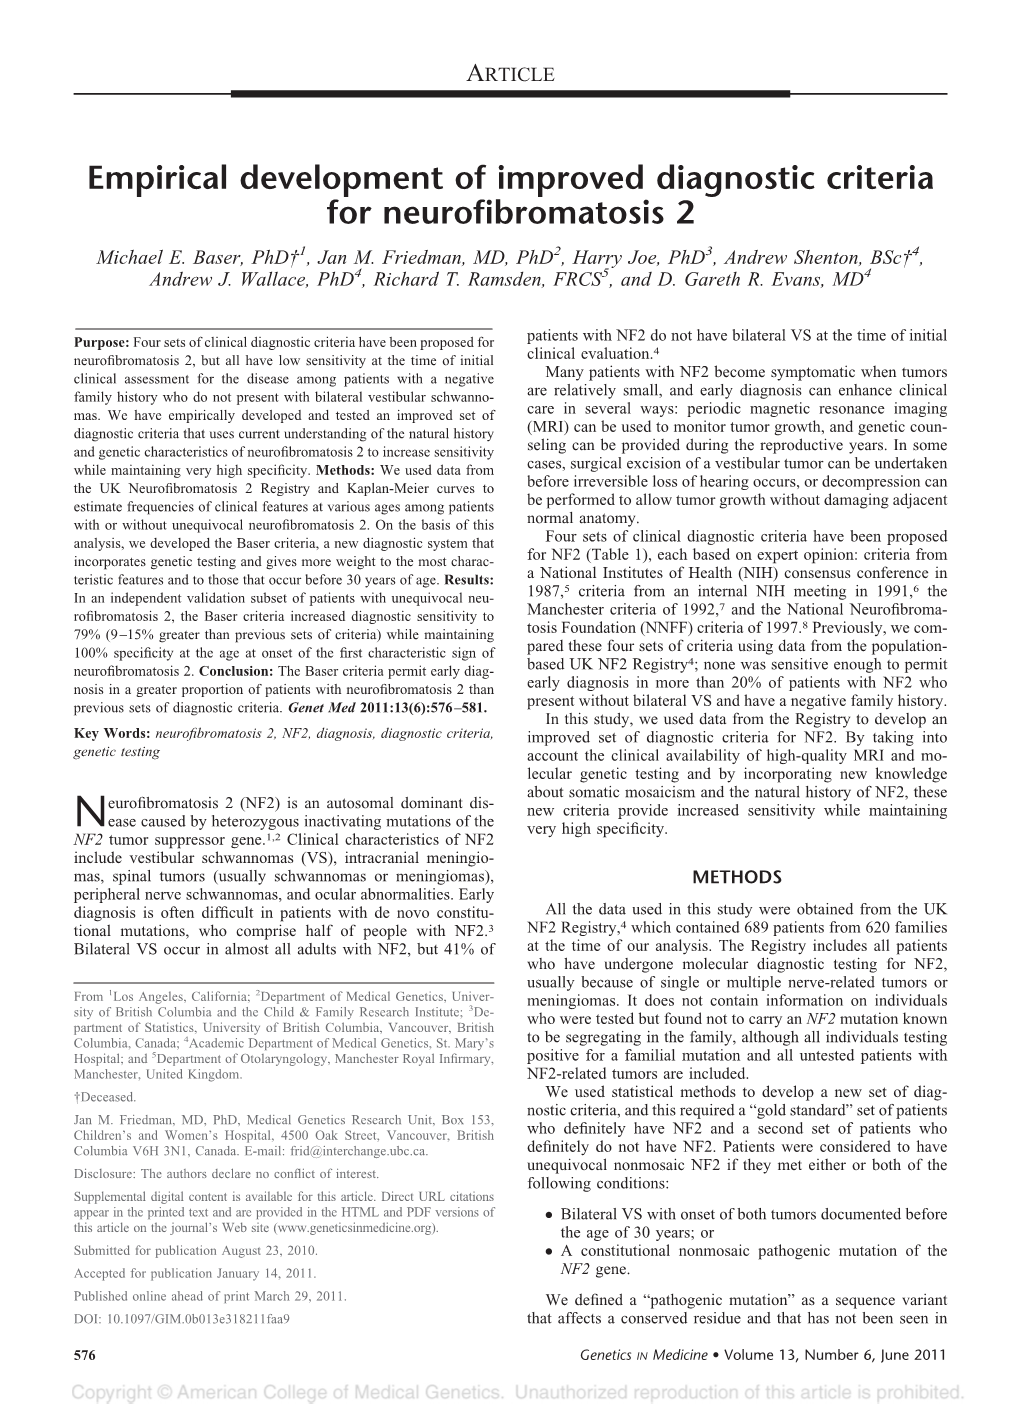 Empirical Development of Improved Diagnostic Criteria for Neurofibromatosis 2 Michael E